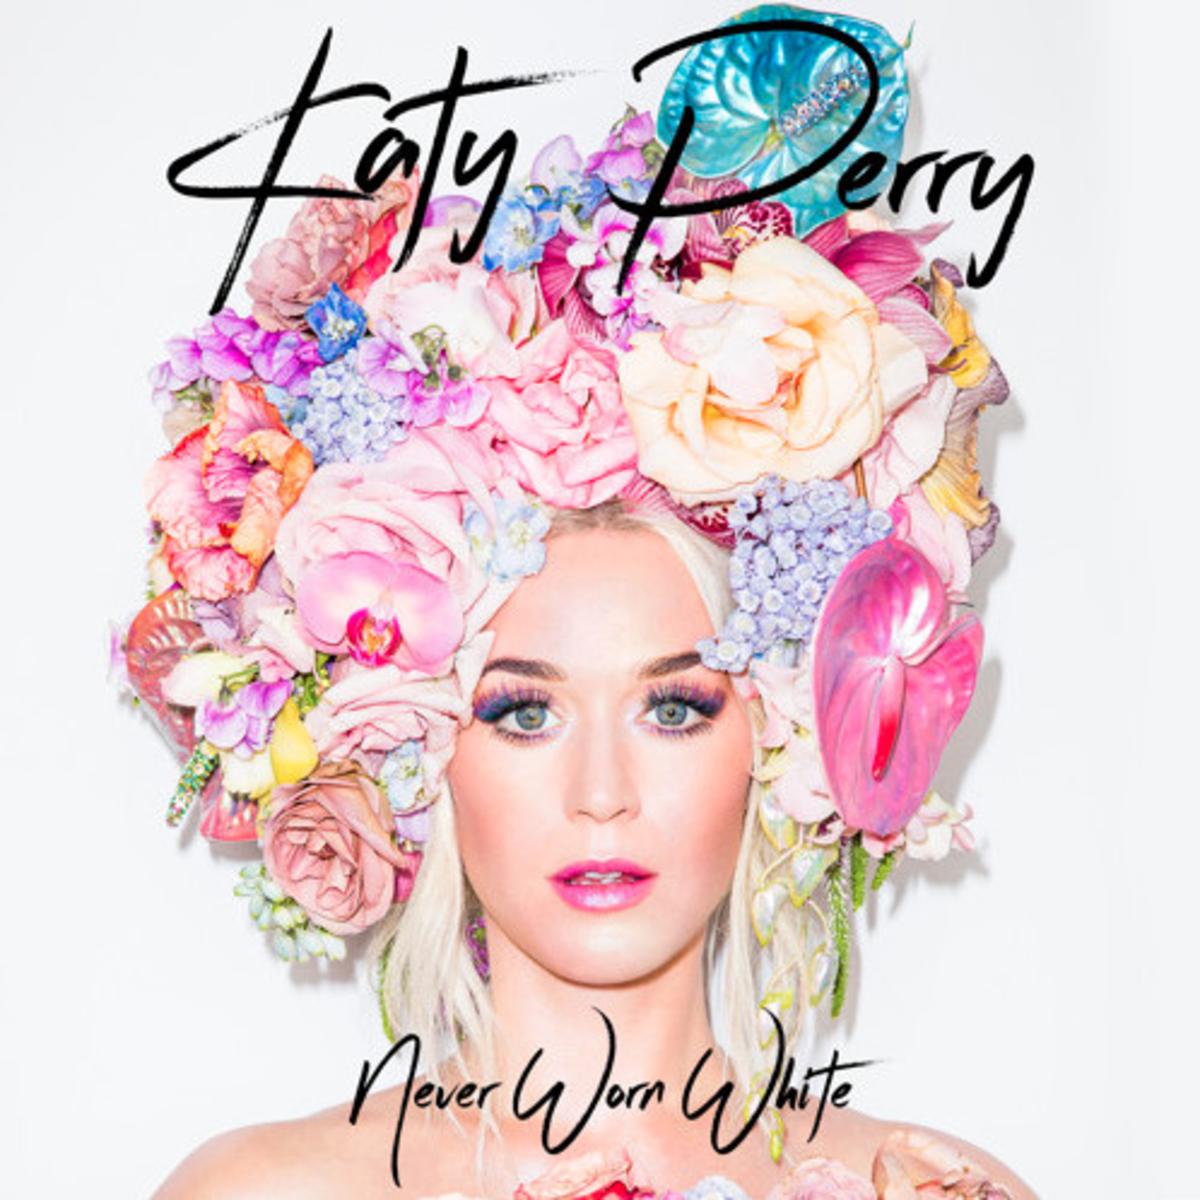 Katy Perry - Never Worn White / AUDIO & VIDEO 33